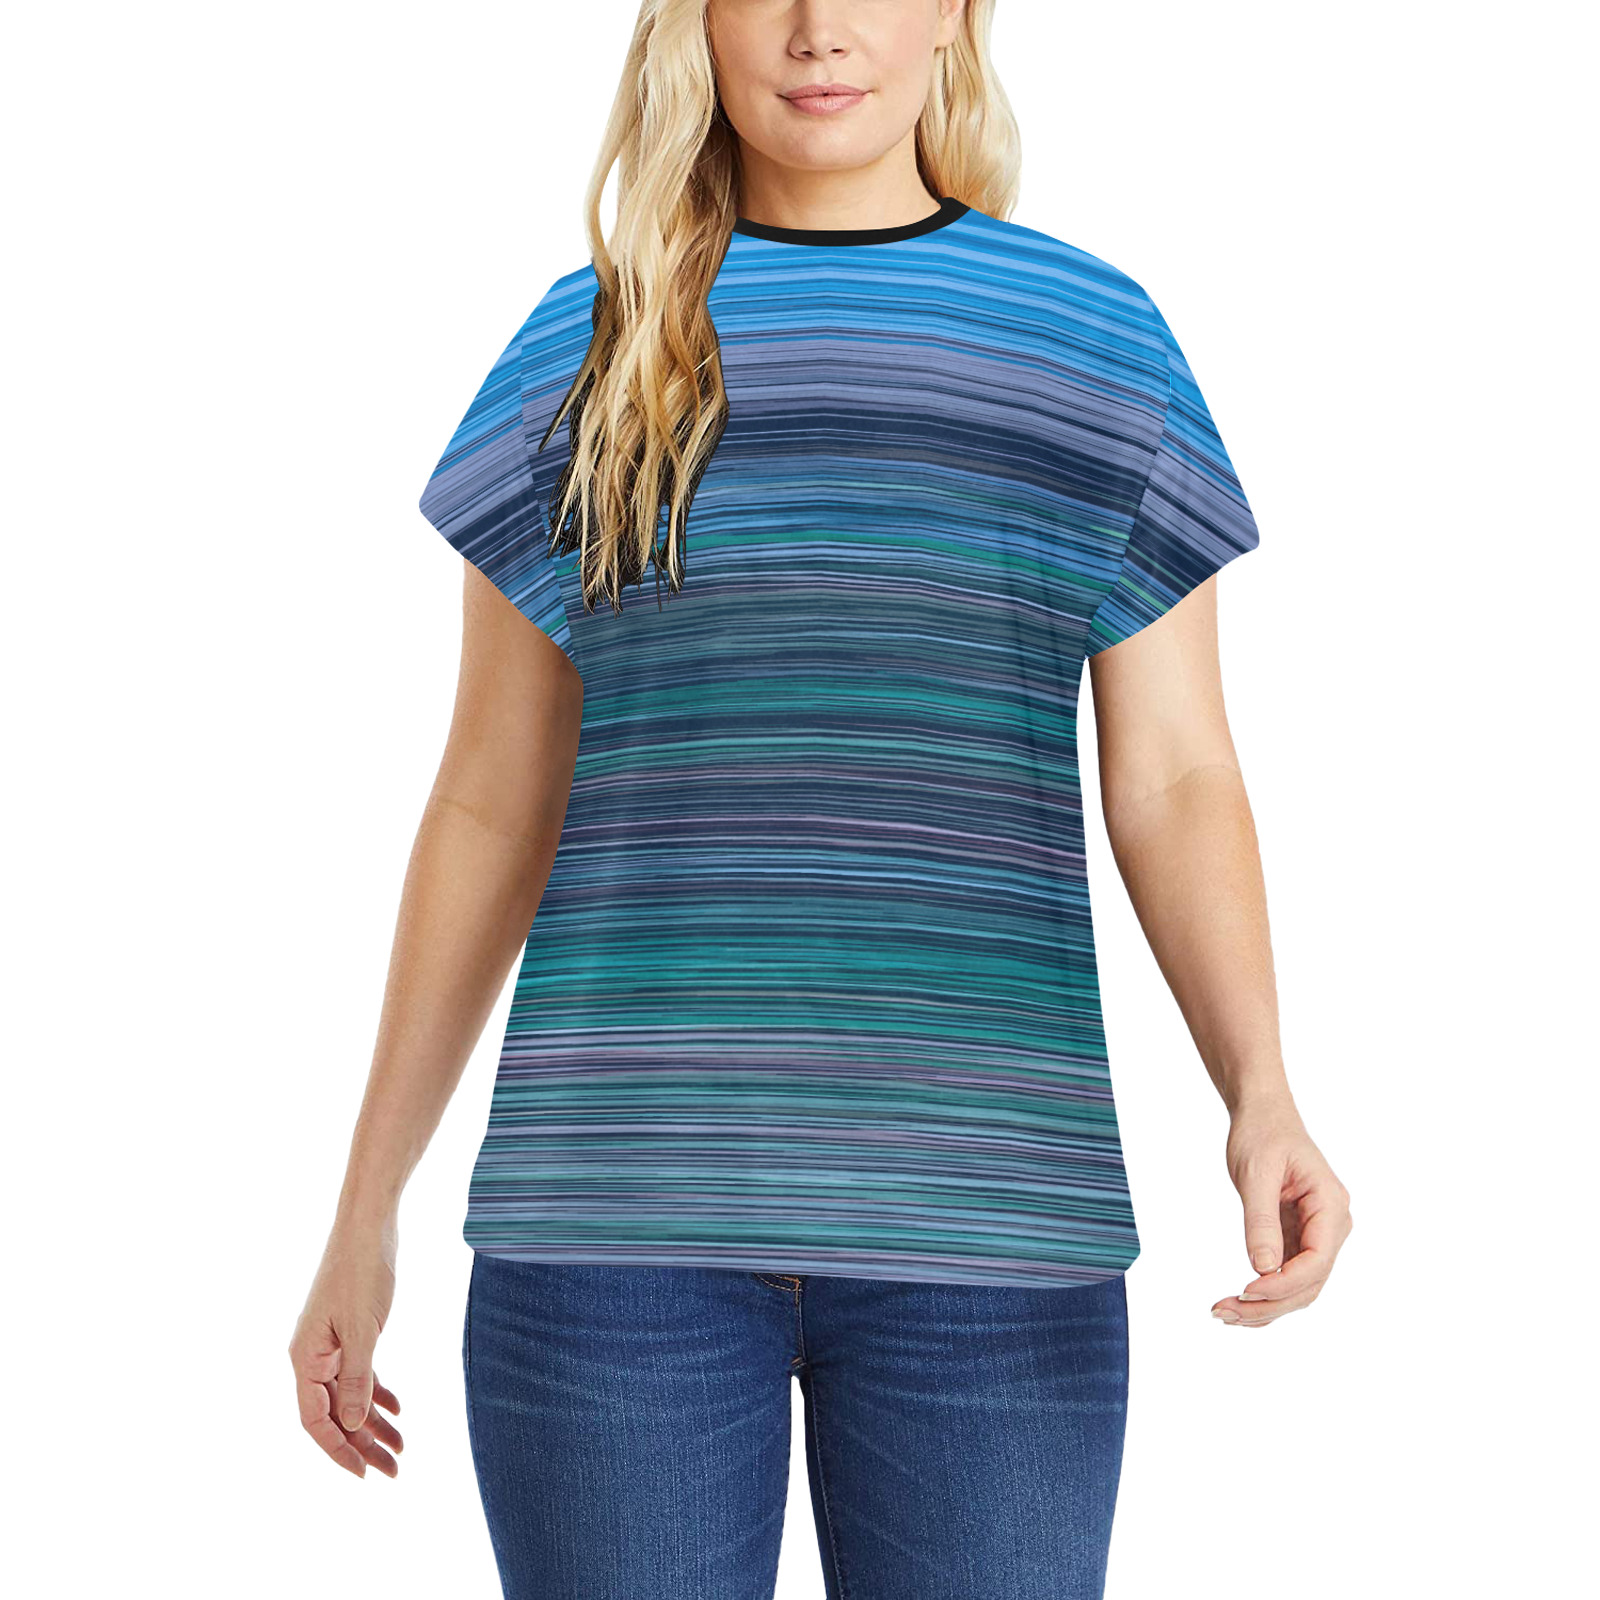 Abstract Blue Horizontal Stripes Women's Pajama T-shirt